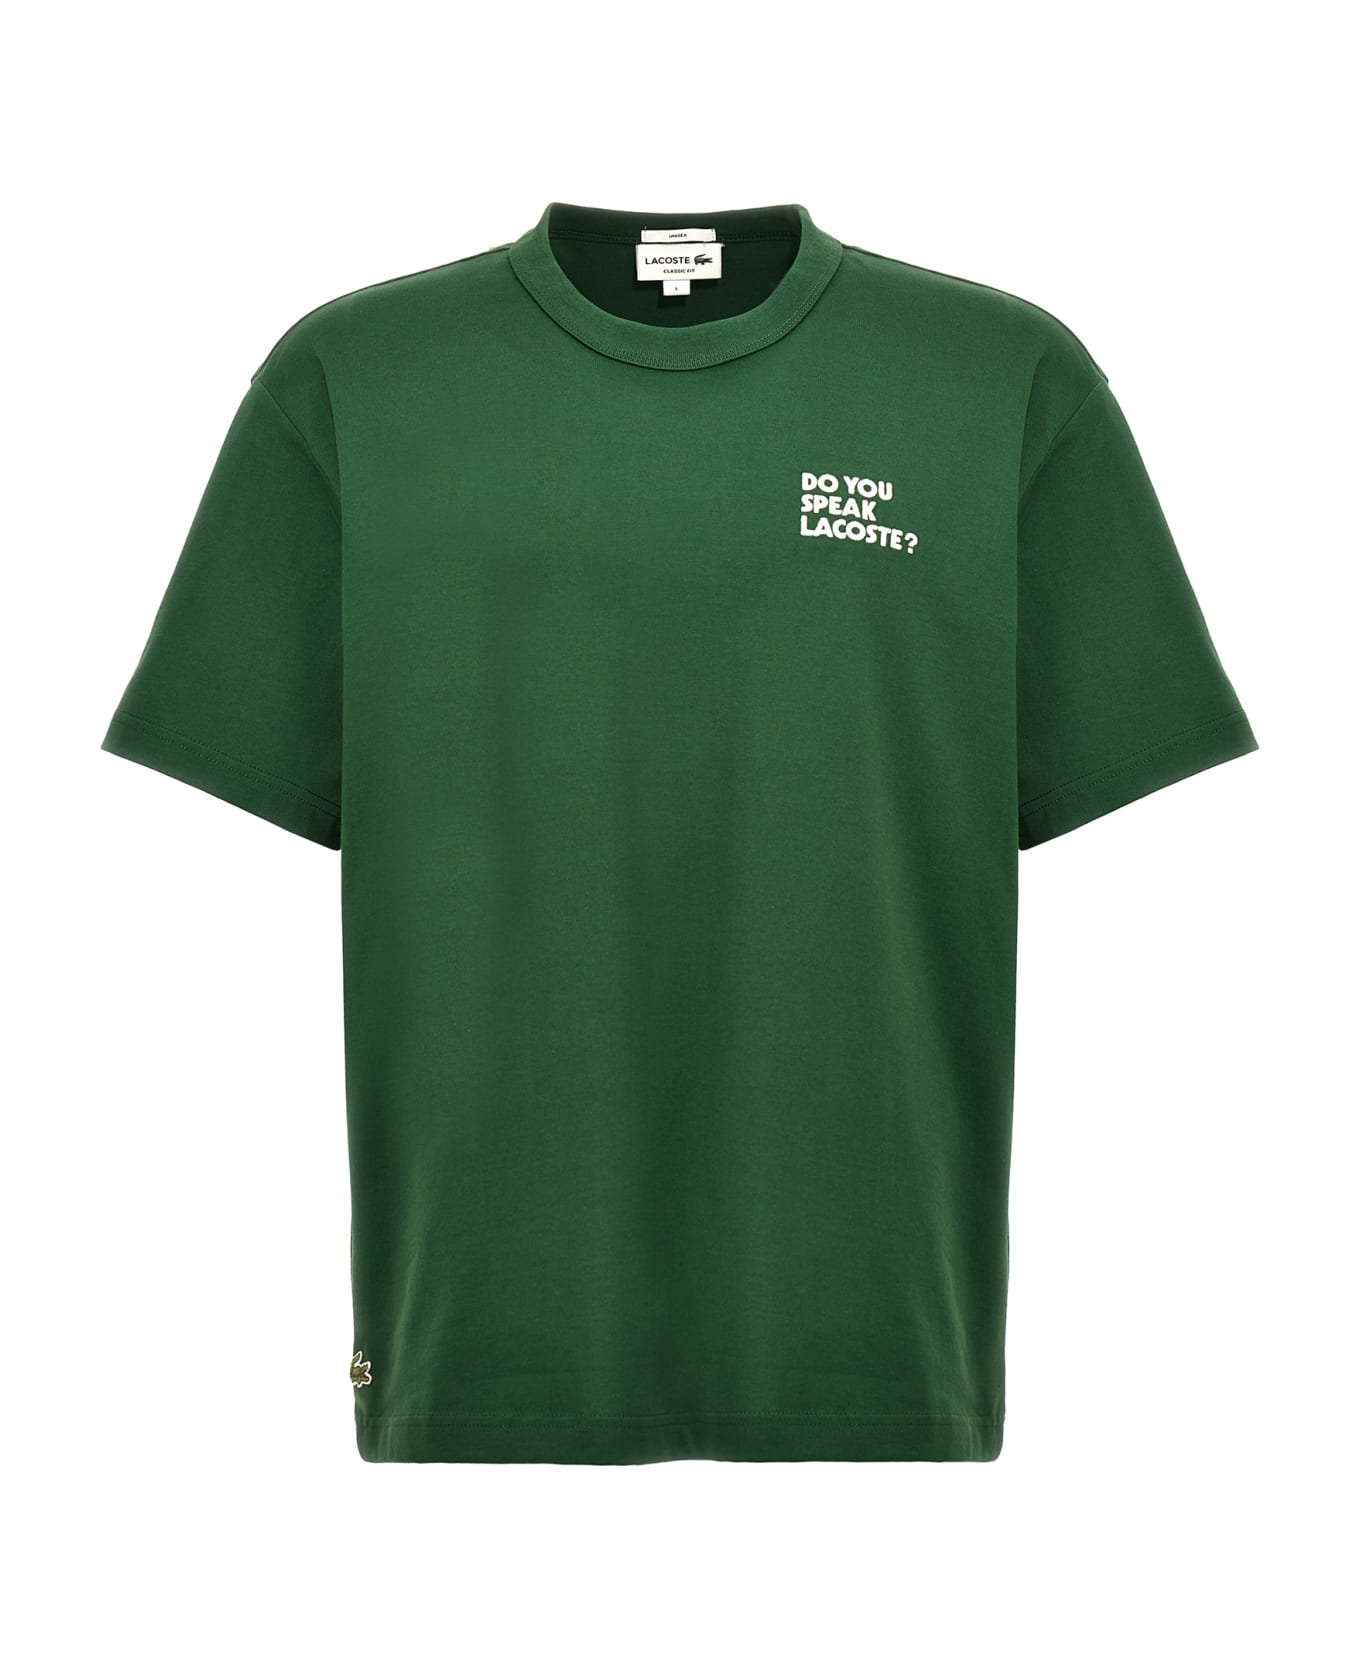 Lacoste 'do You Speak Lacoste?' T-shirt - Green Tシャツ